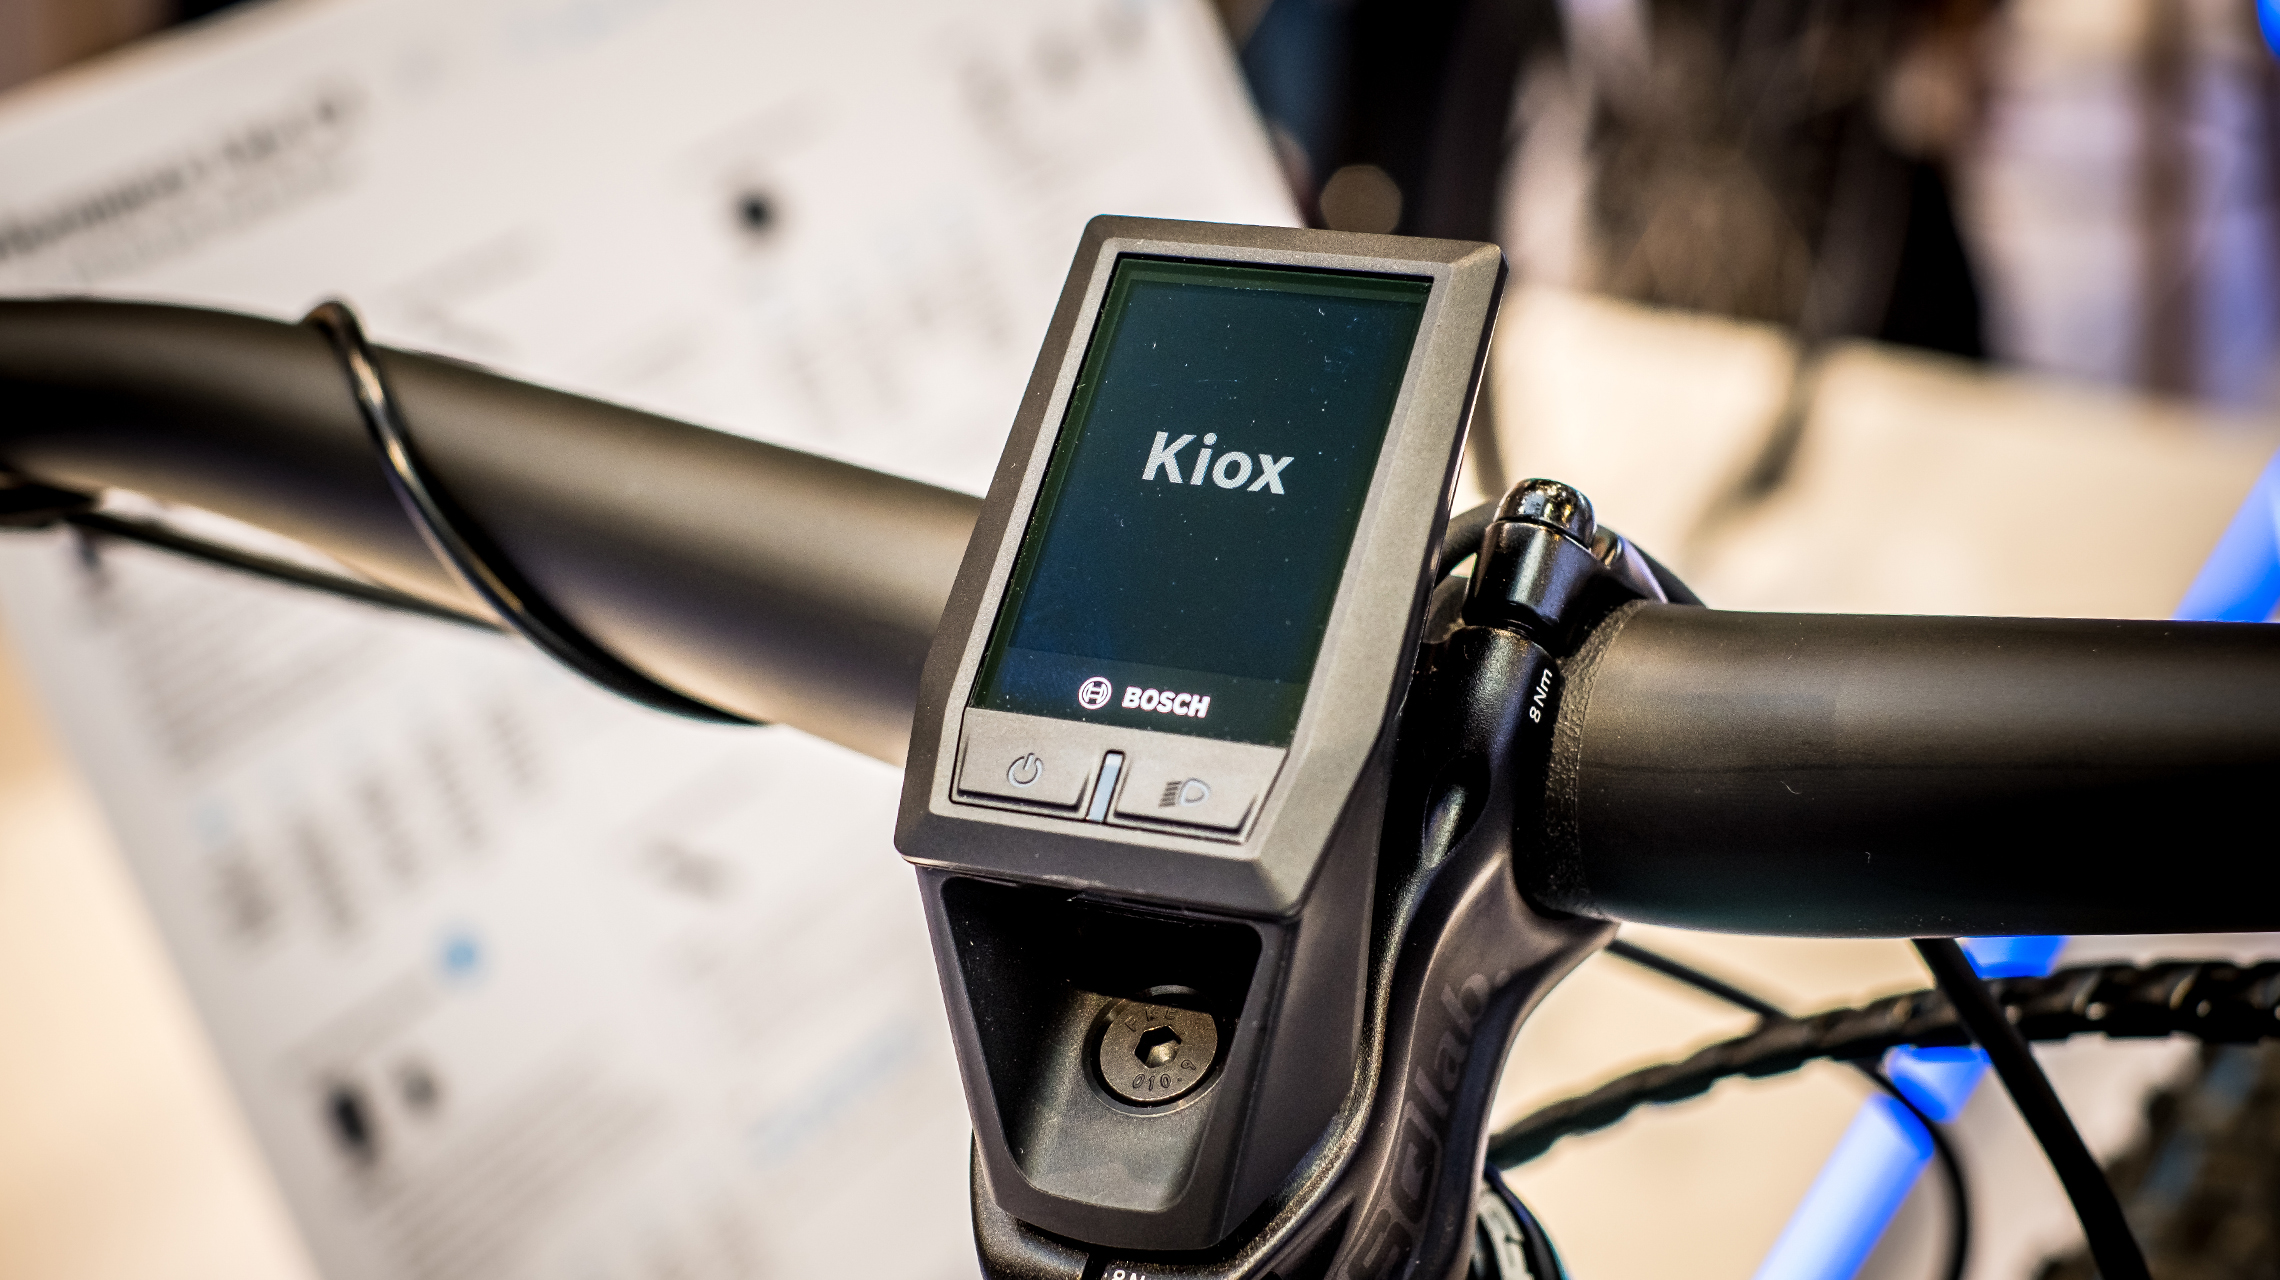 Eurobike 2018 Bosch Kiox Smartes Kompaktes Display Emtb News De